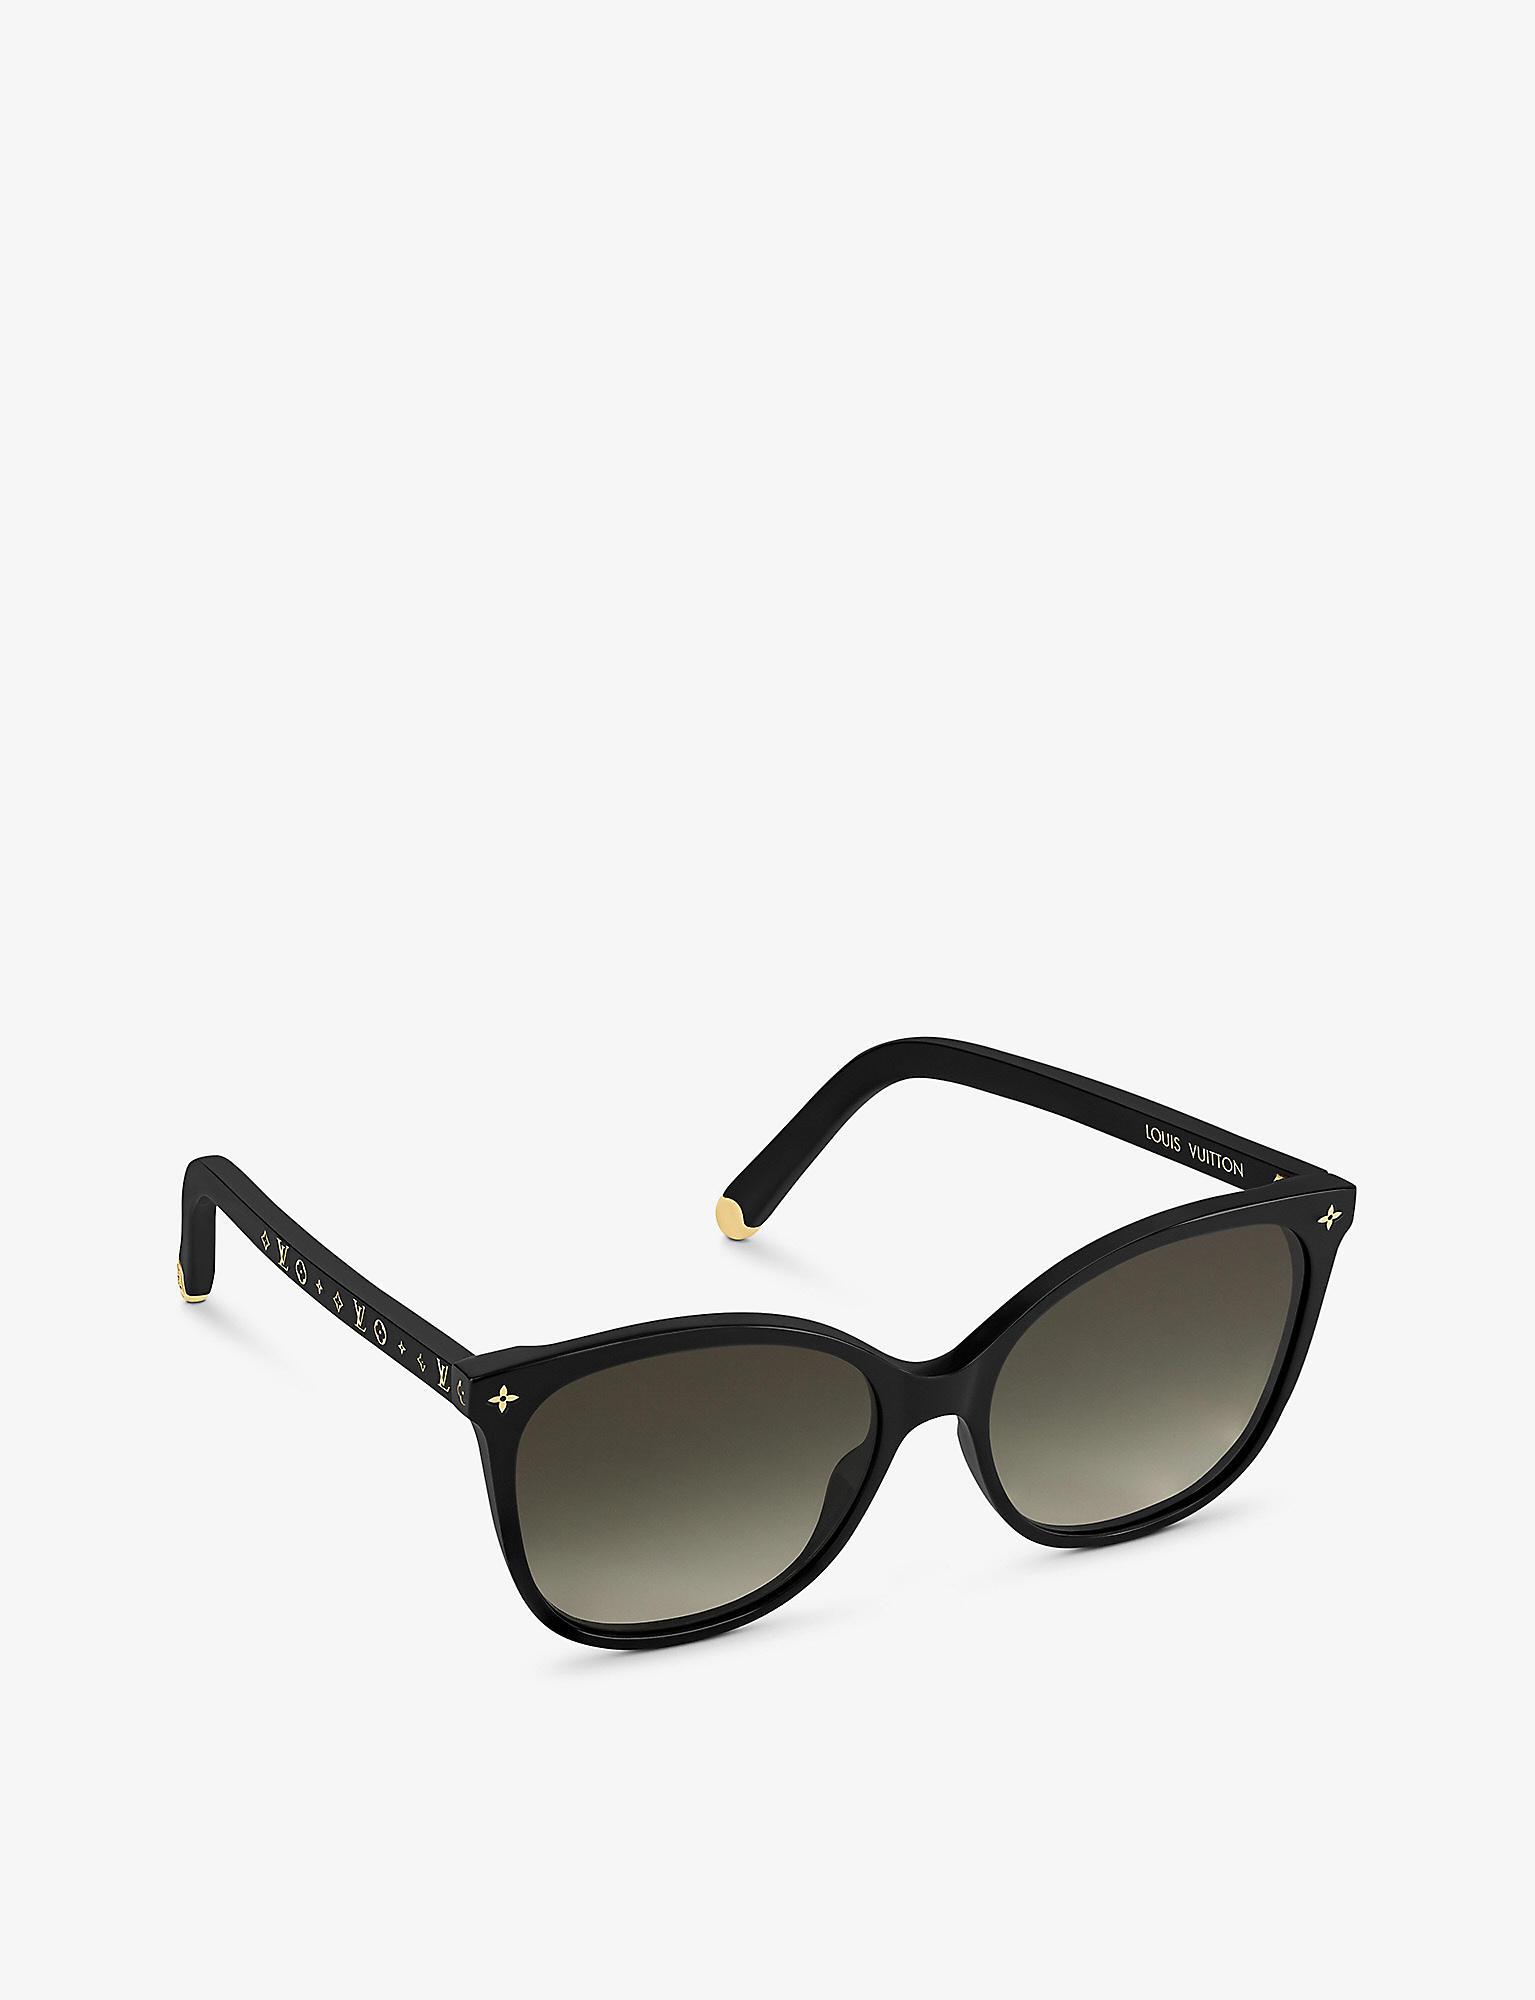 Louis Vuitton LV Malletage Cat Eye Sunglasses Cream Acetate & Metal. Size E